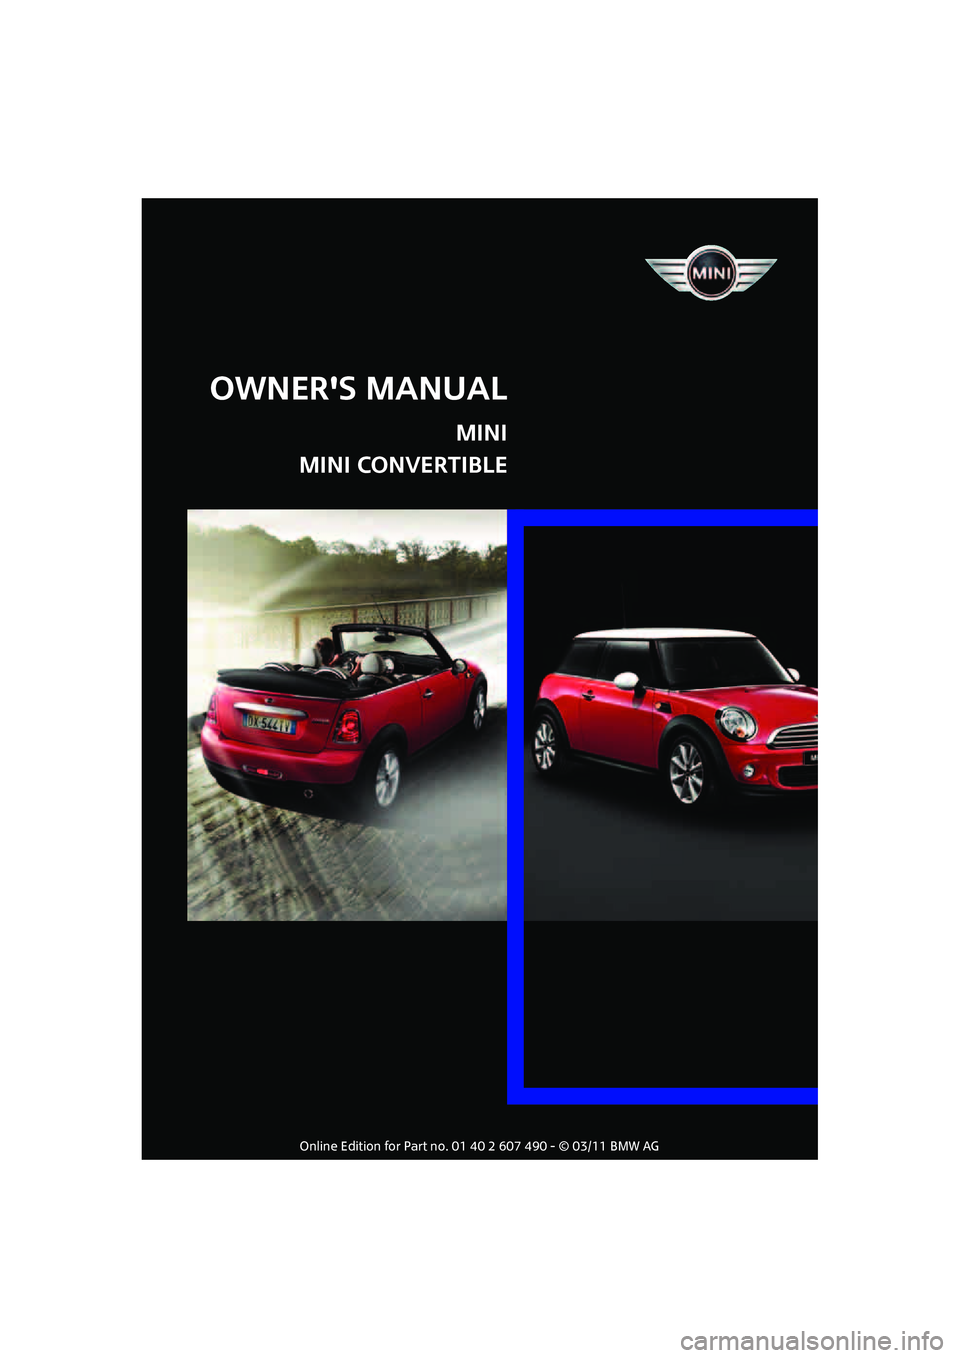 MINI COOPER 2011  Owners Manual   
OWNERS MANUAL
MINI
MINI CONVERTIBLE 